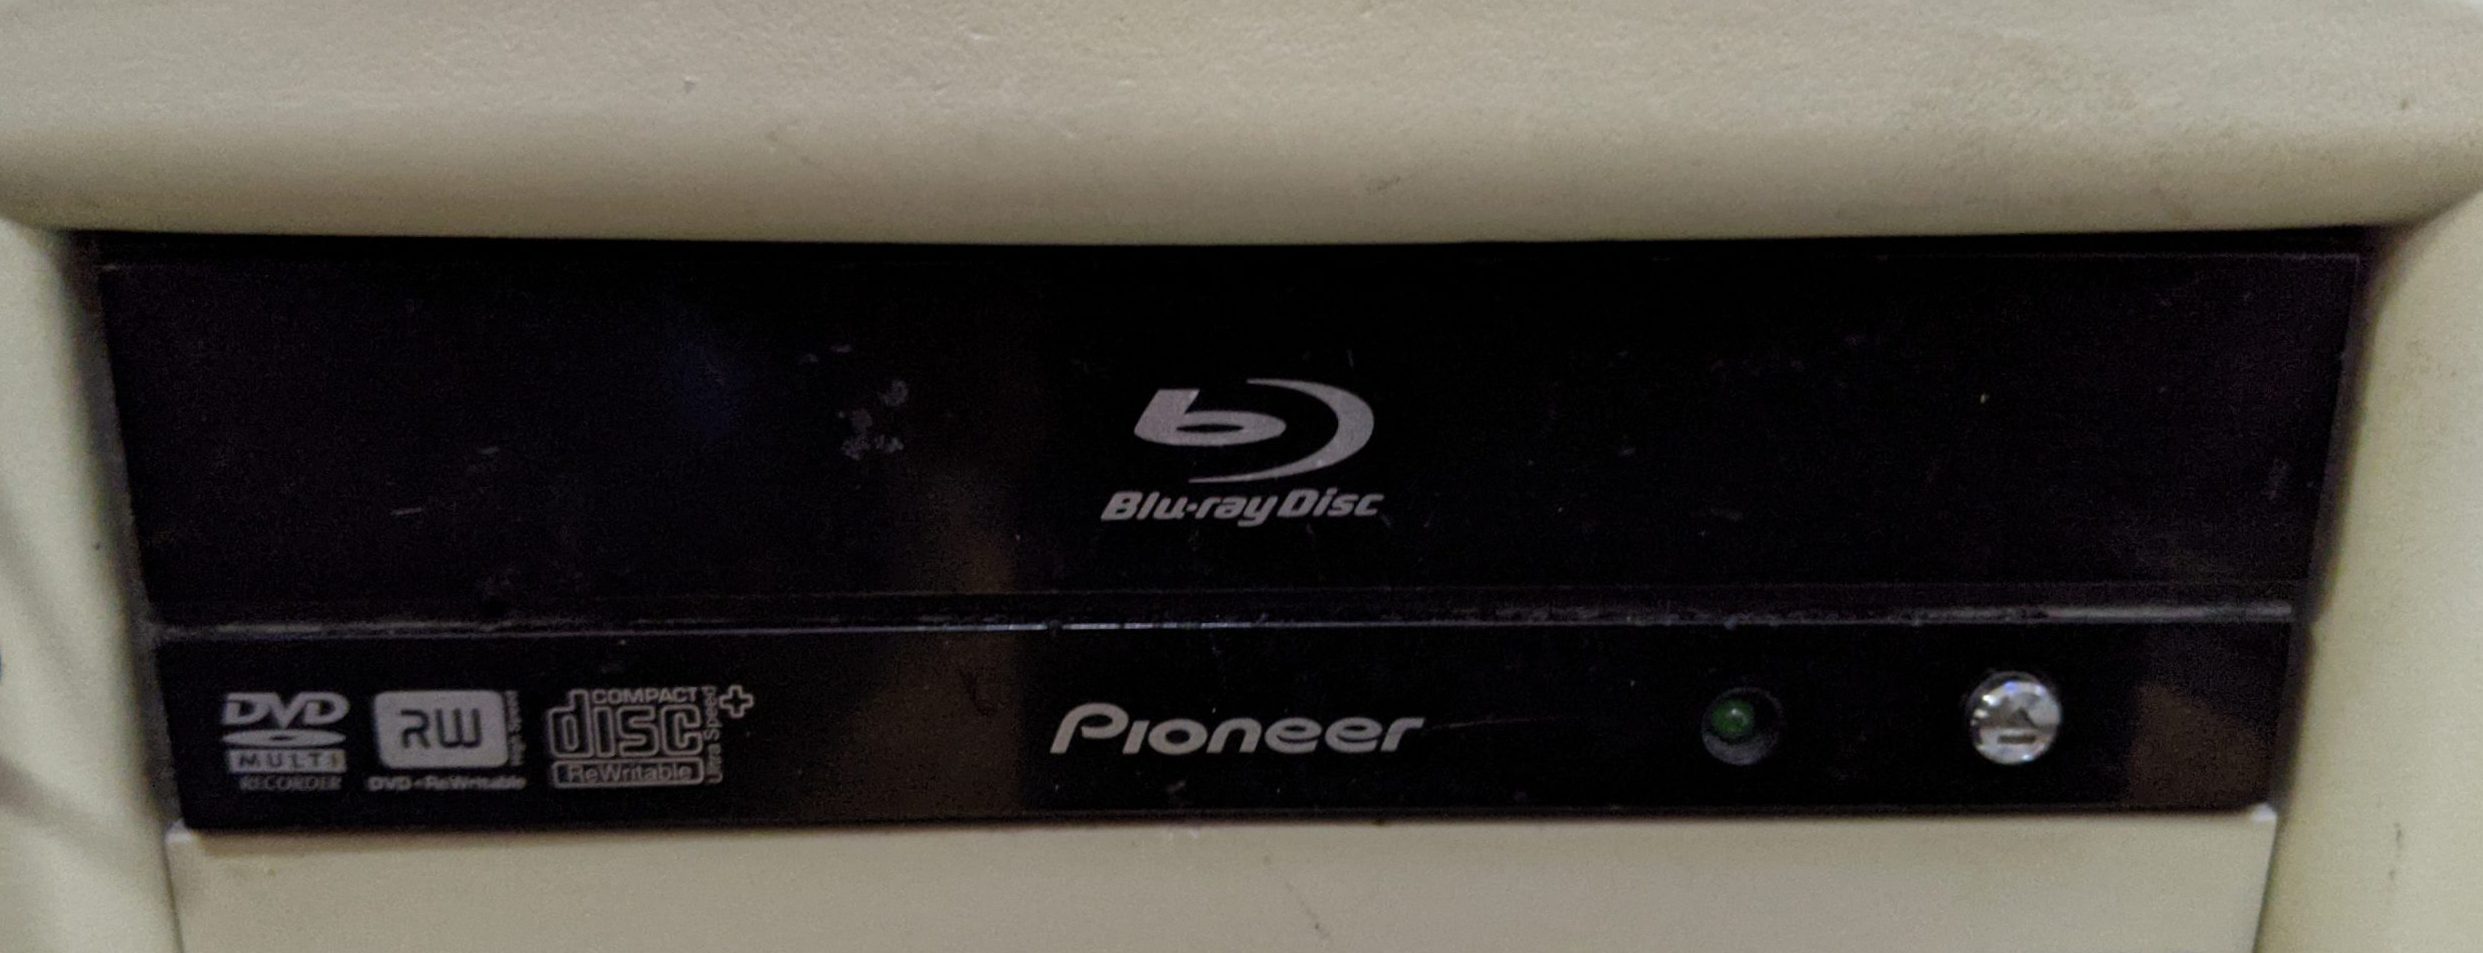 Pioneer BluRay Drive